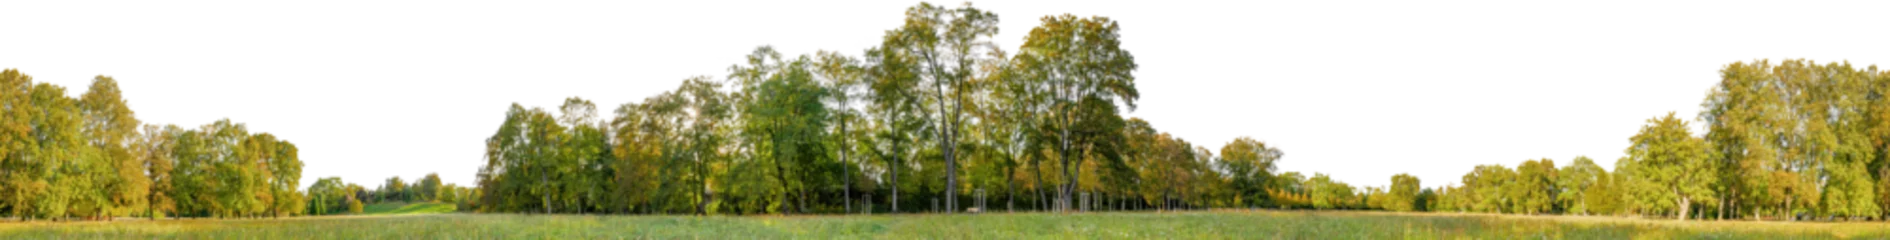 Abwaschbare Fototapete Wiese, Sumpf tree line trees autumn xl horizontal seamless arch viz cutout